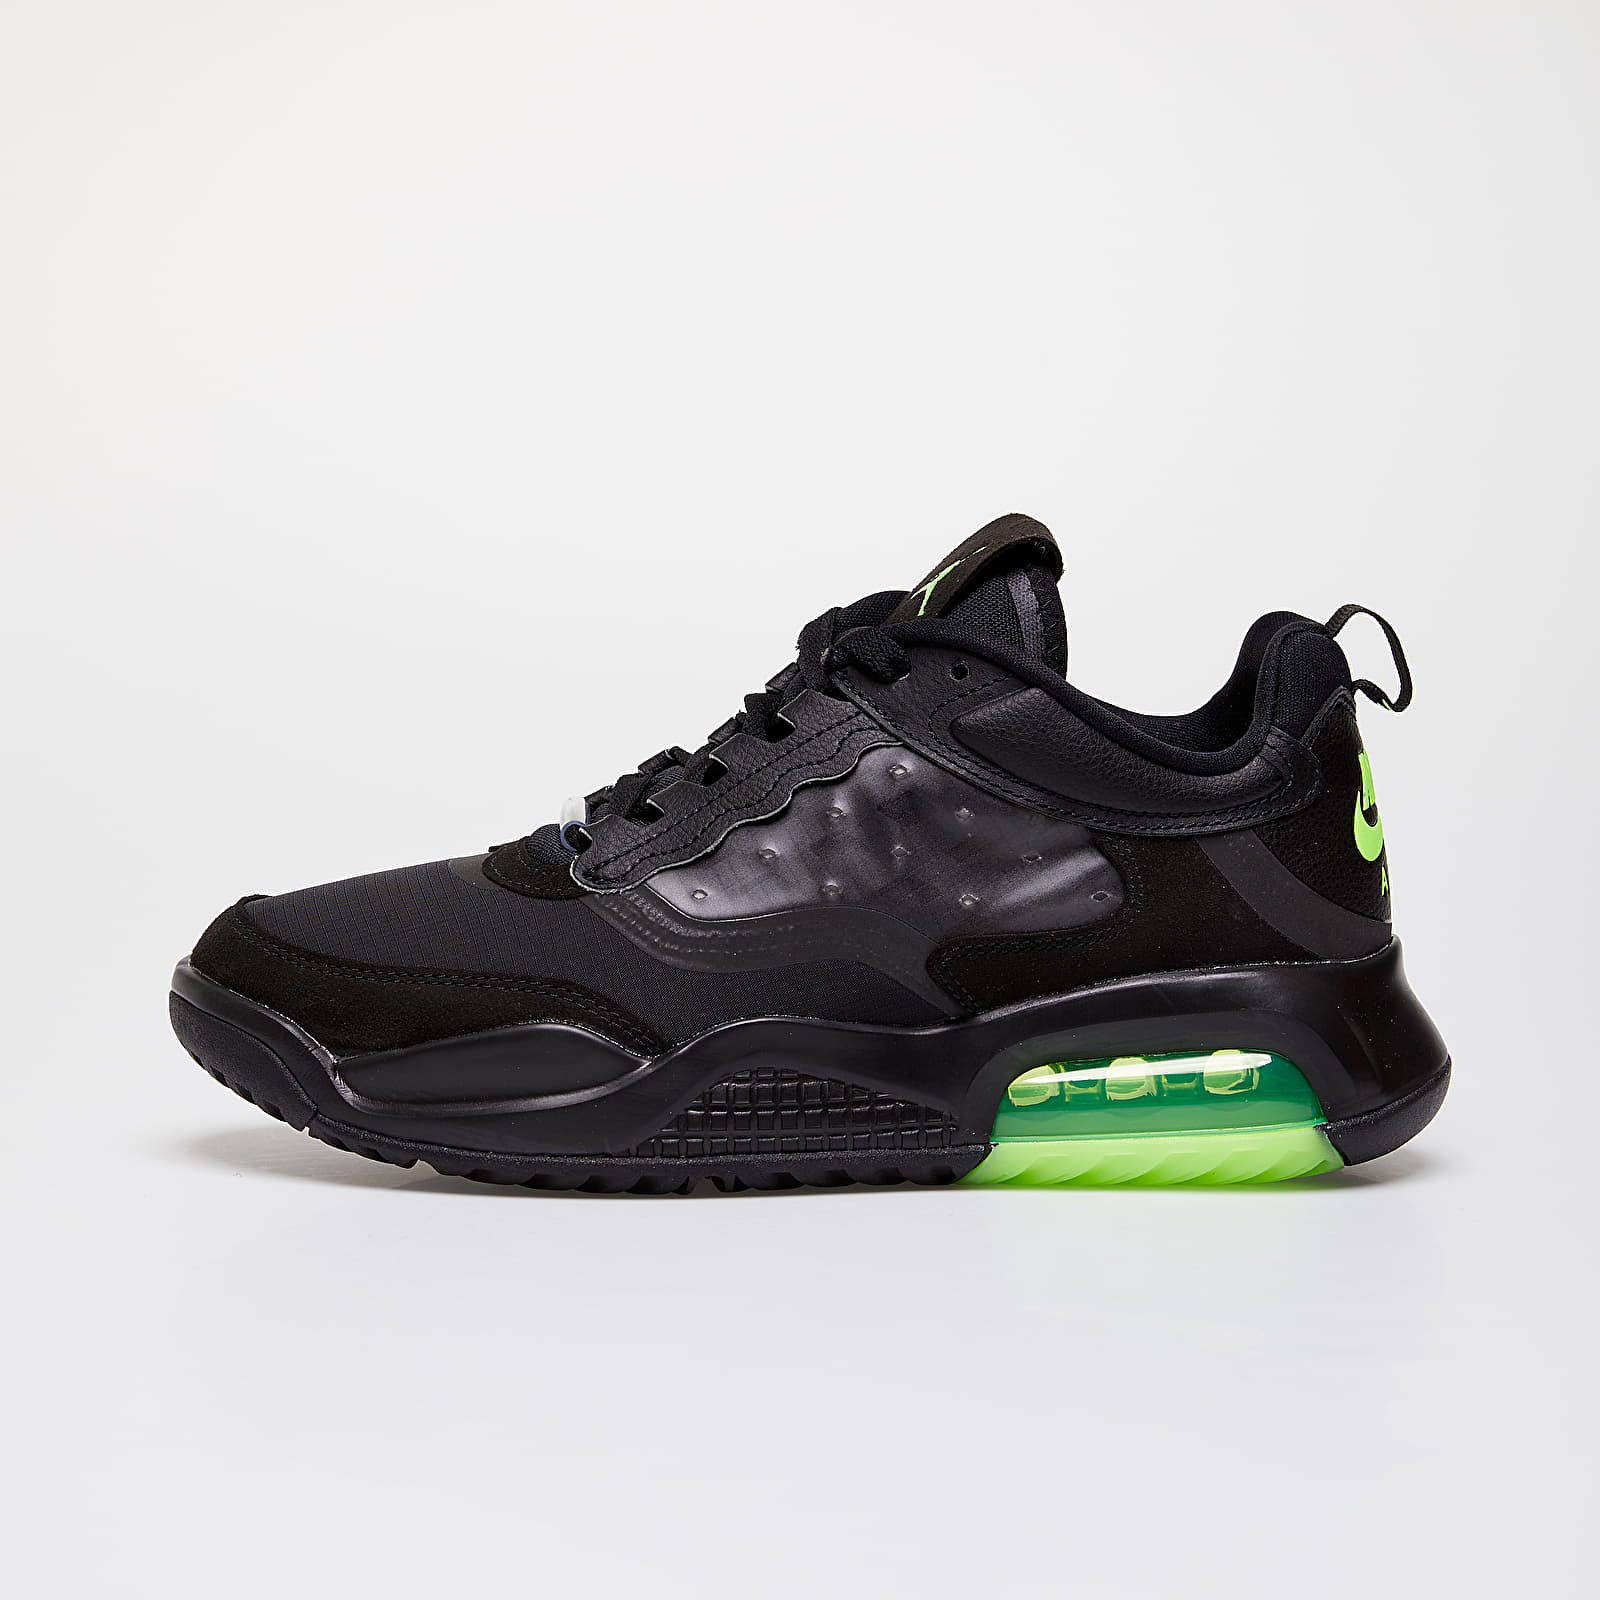 Men's shoes Jordan Max 200 Black/ Electric Green-Black